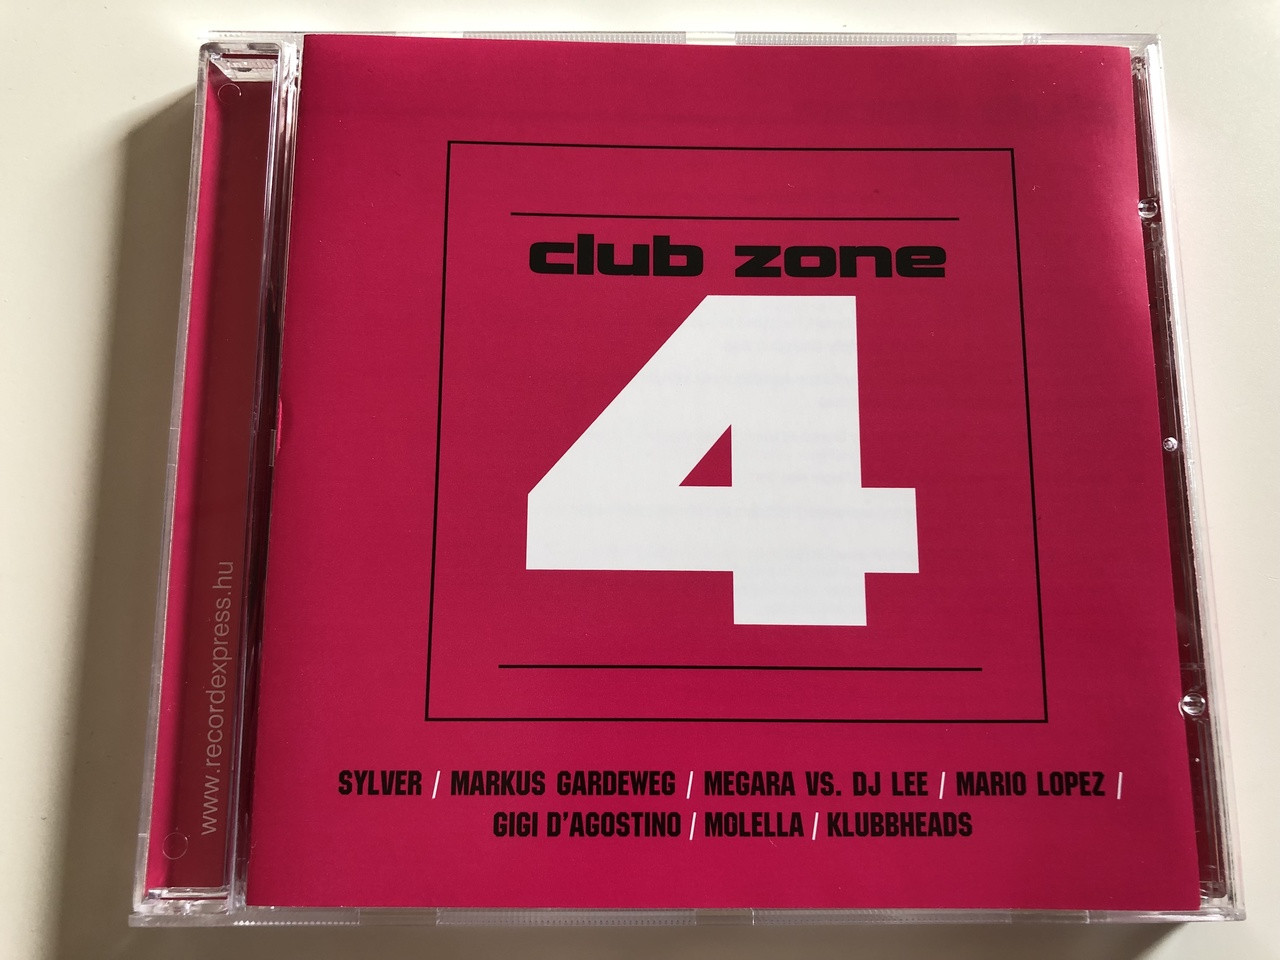 Club Zone 4 - Sylver, Markus Gardeweg, Megara VS. DJ Lee, Mario Lopez, Gigi  D' AGOSTINO, Molella, Klubbheads / Audio CD 2005 - bibleinmylanguage